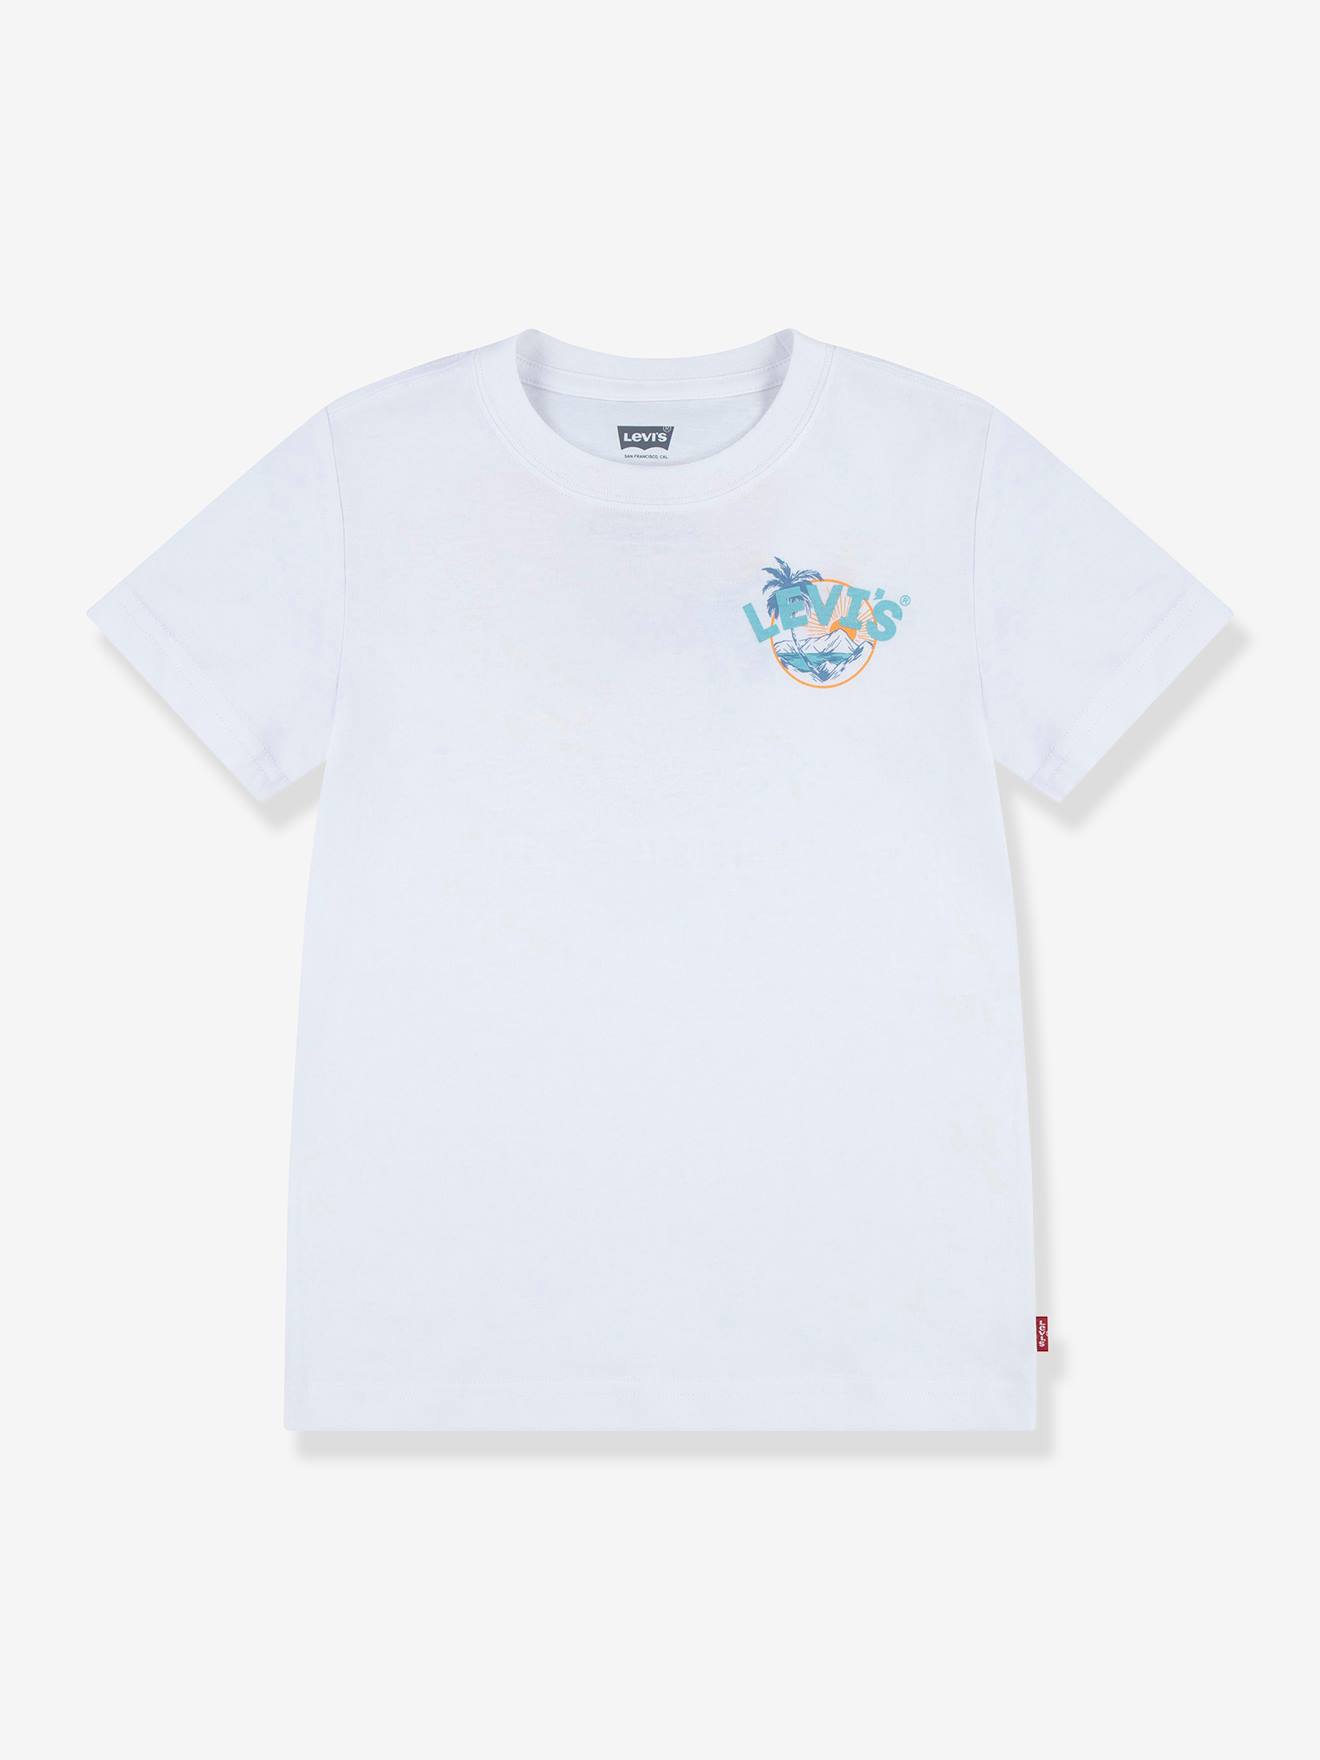 Printed T-Shirt by Levi’s(r) for Boys ecru